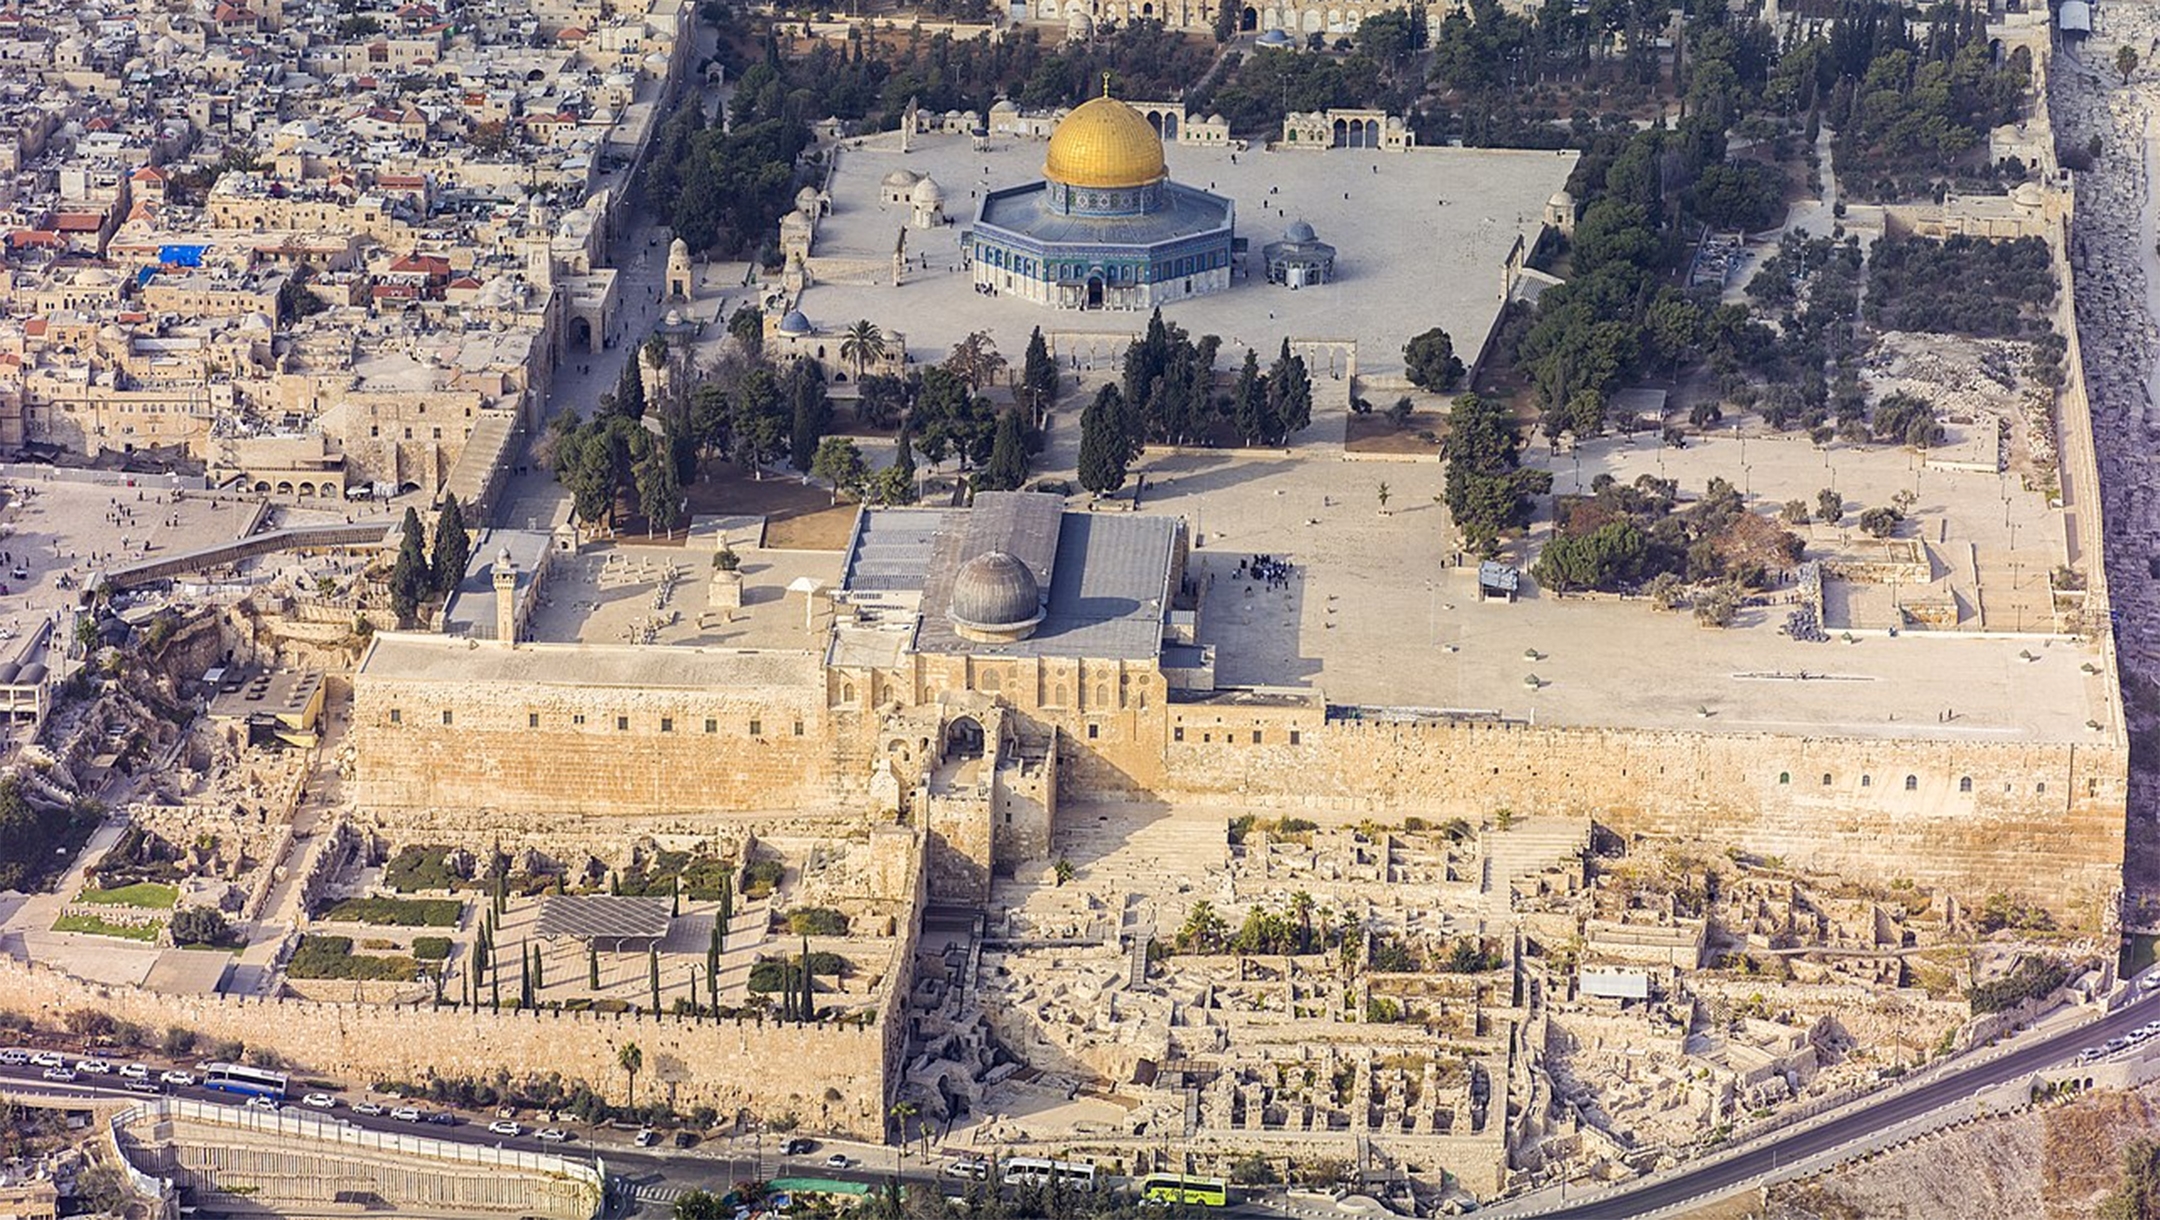 A veiw to the Temple Mount and Al Haram Al Sharif in Jerusalem, Israel. (Andrew Shiva/Wikimedia Commons)